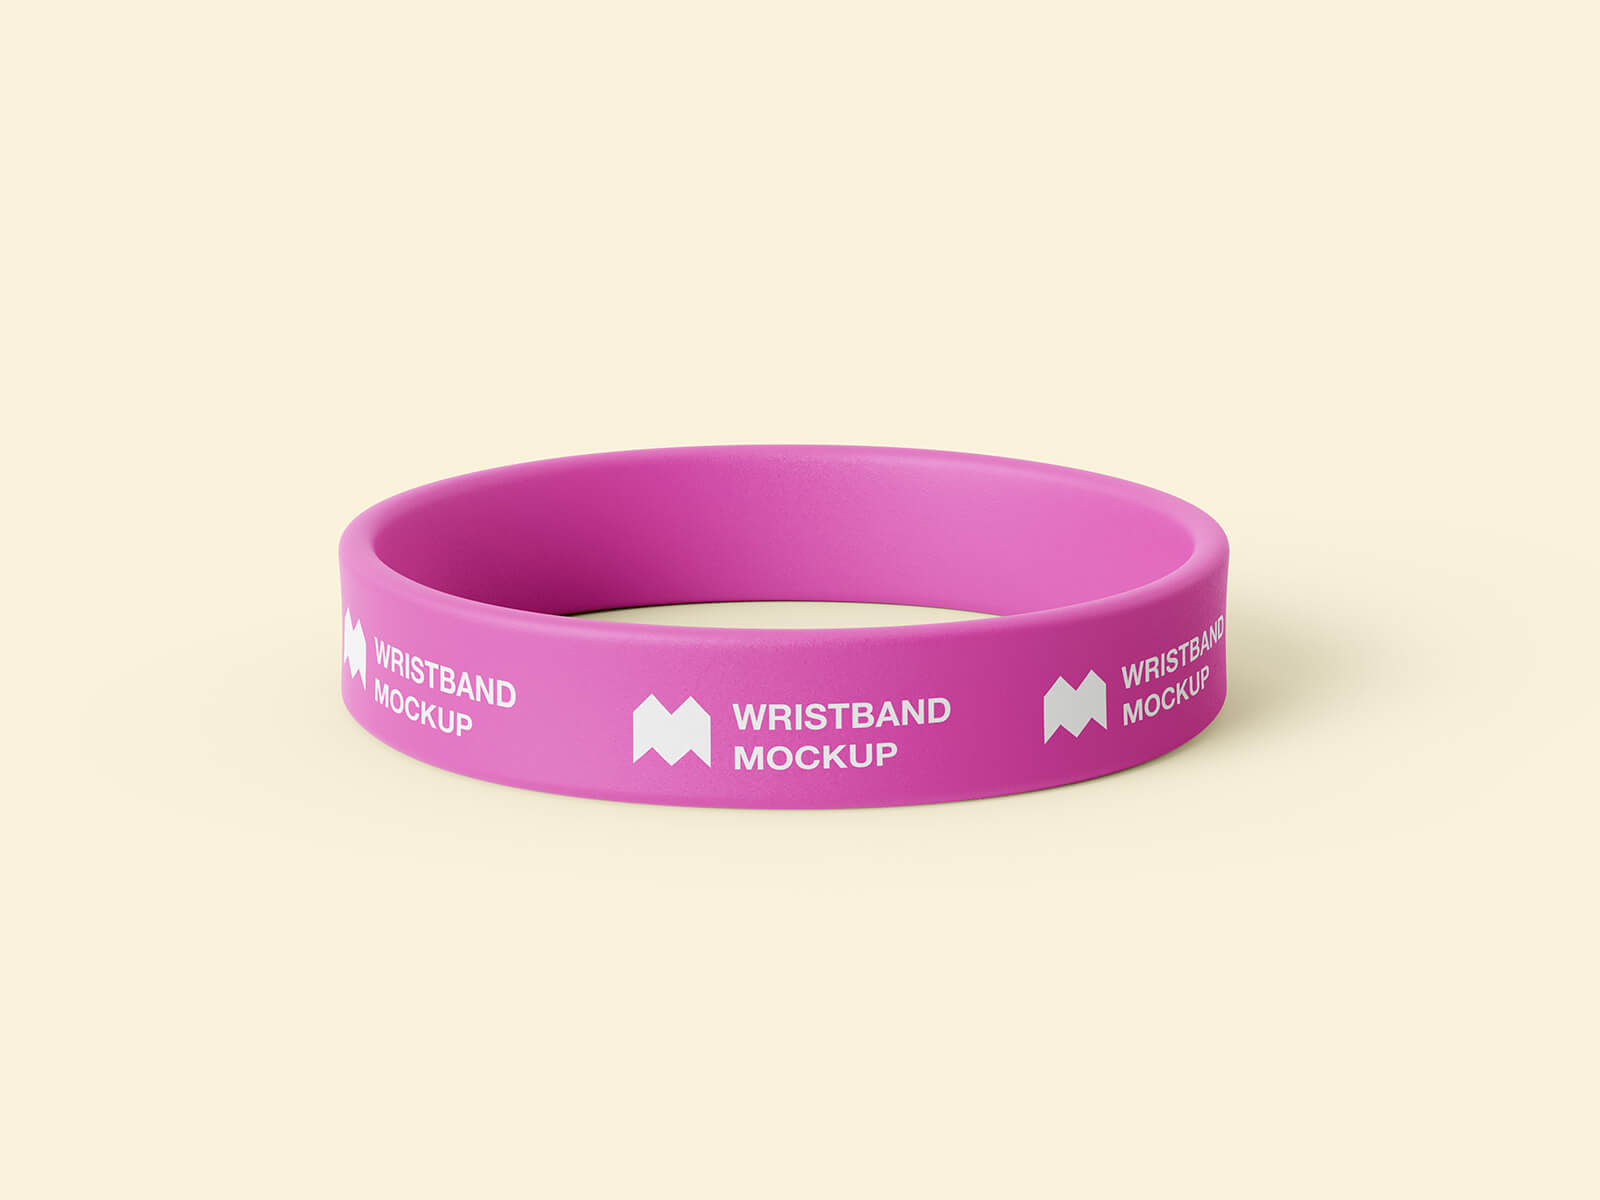 Free-Silicone-Wristbands-Rubber-Bracelet-Mockup-PSD-Set